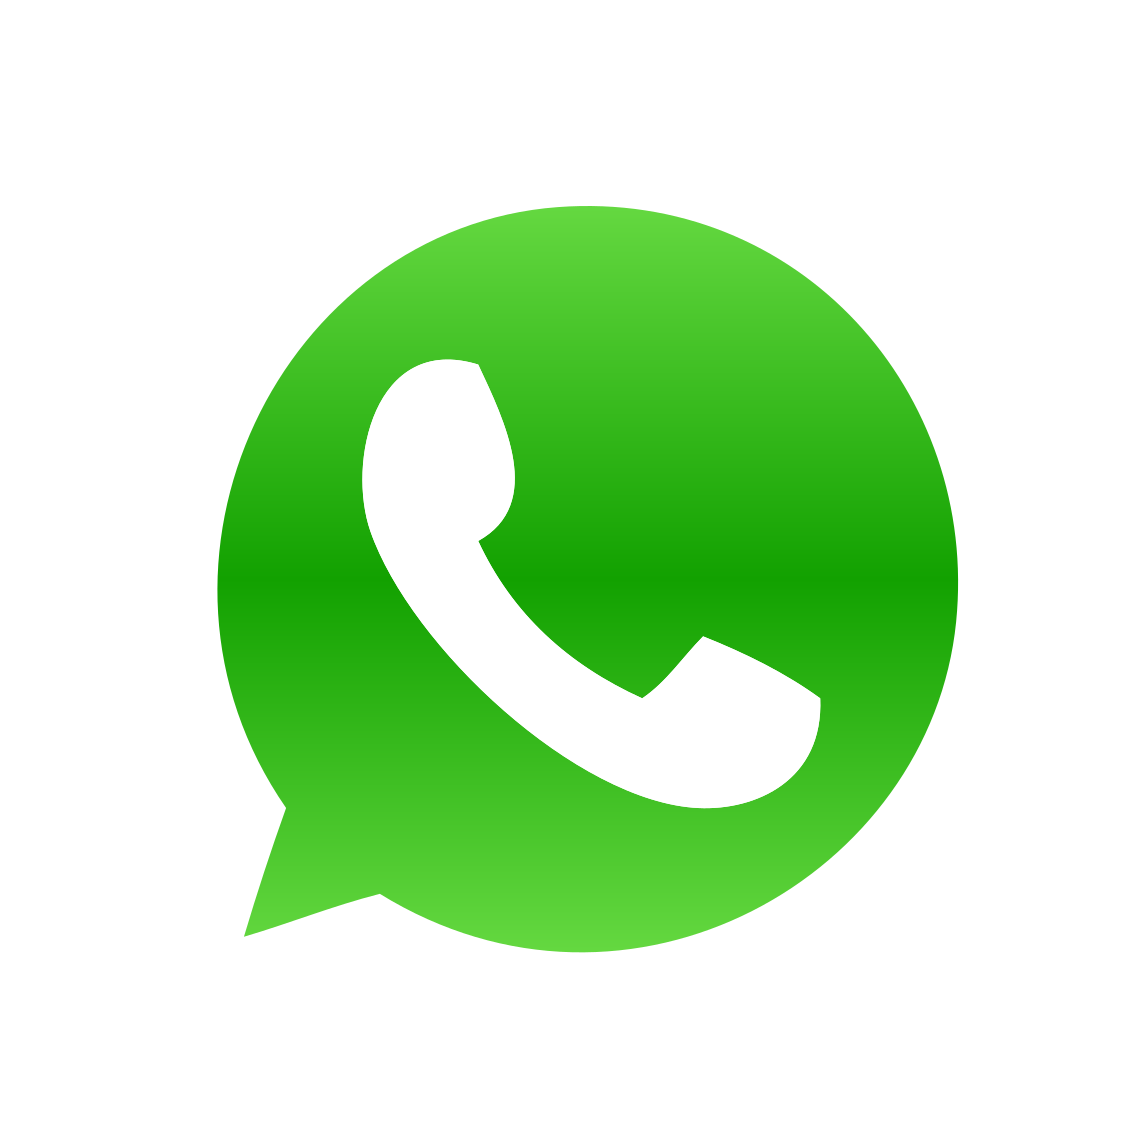 Whatsapp Logo PNG HD #90874 5000x3547 Pixel | pngteam.com